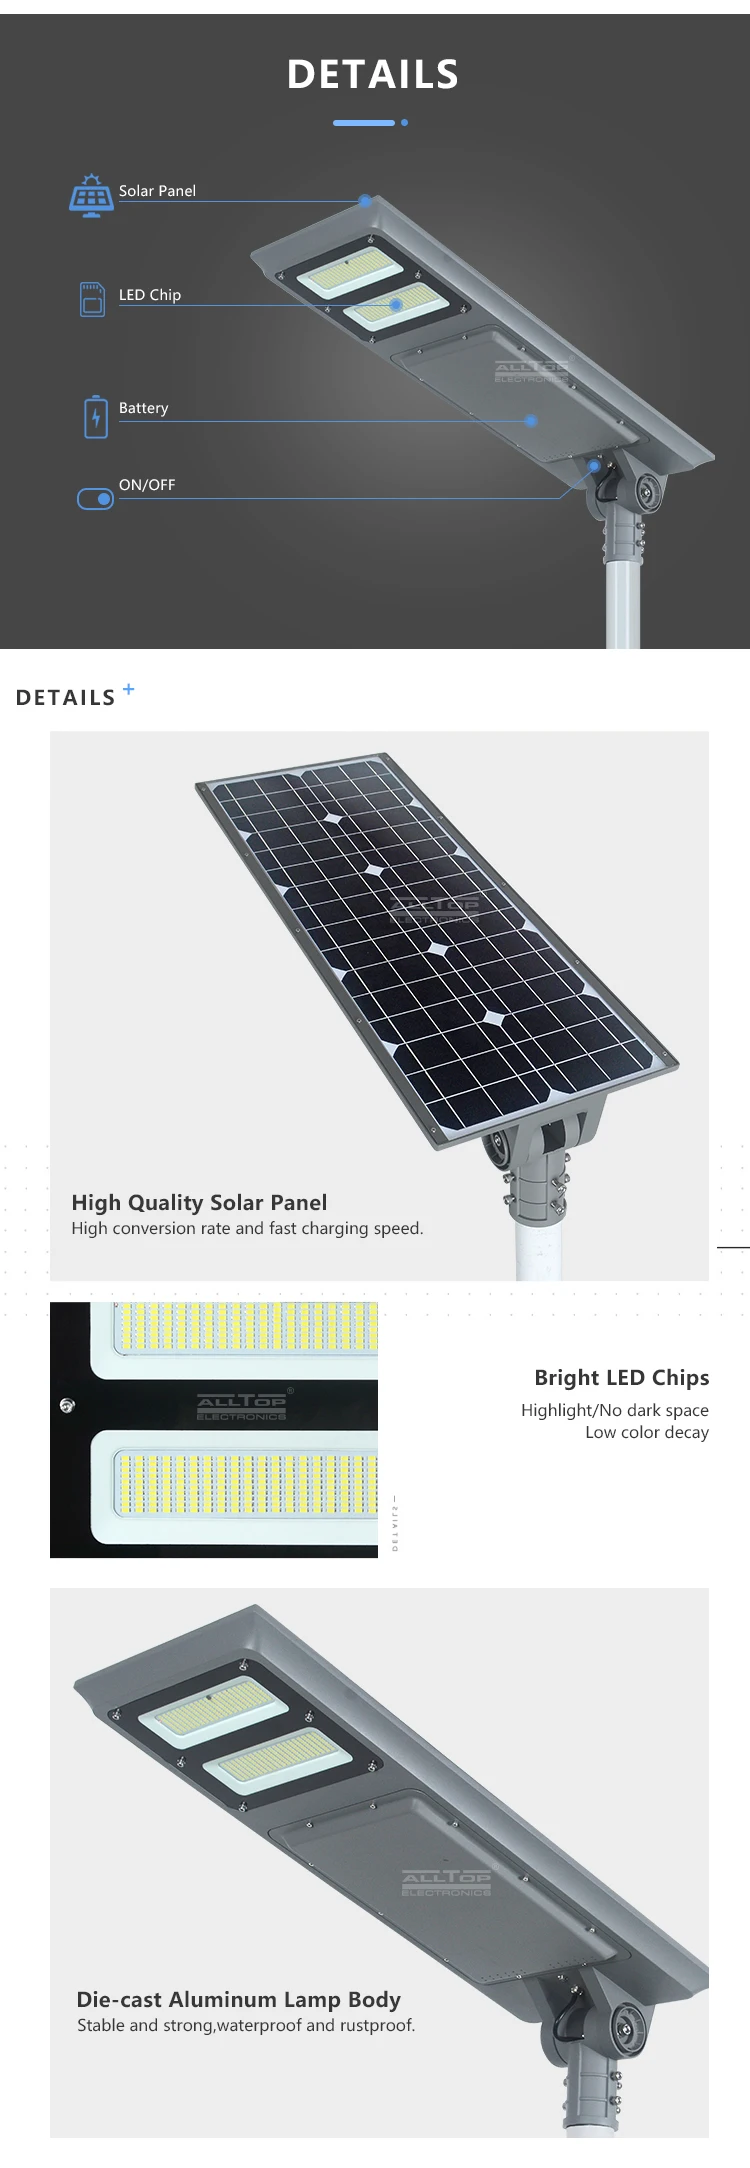 ALLTOP All in one Integrated 100watt ip65 outdoor waterproof smd solar led street light price